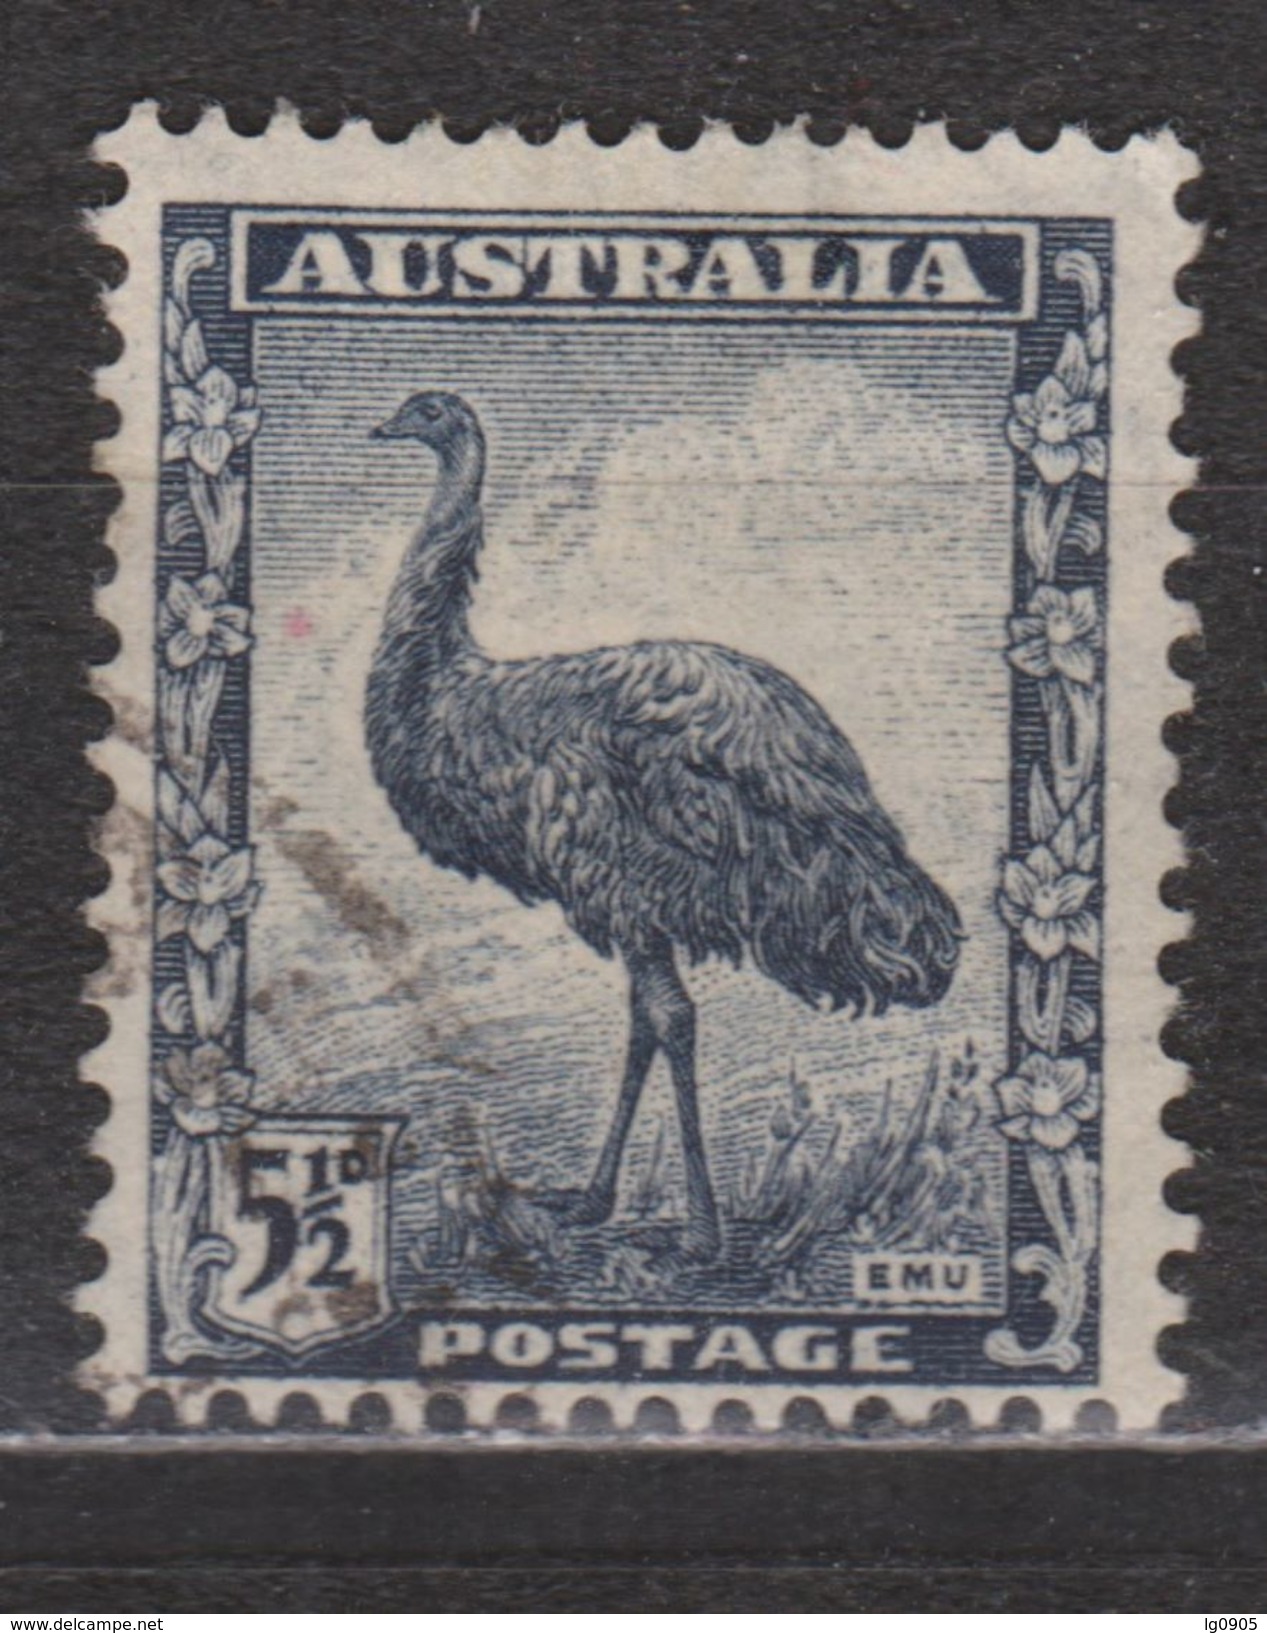 Australie, Australia Used ; Struisvogel Ostrich Autruche Avestruz Emu Emoe 1942 NOW MANY ANIMAL STAMPS FOR SALE - Struisvogels